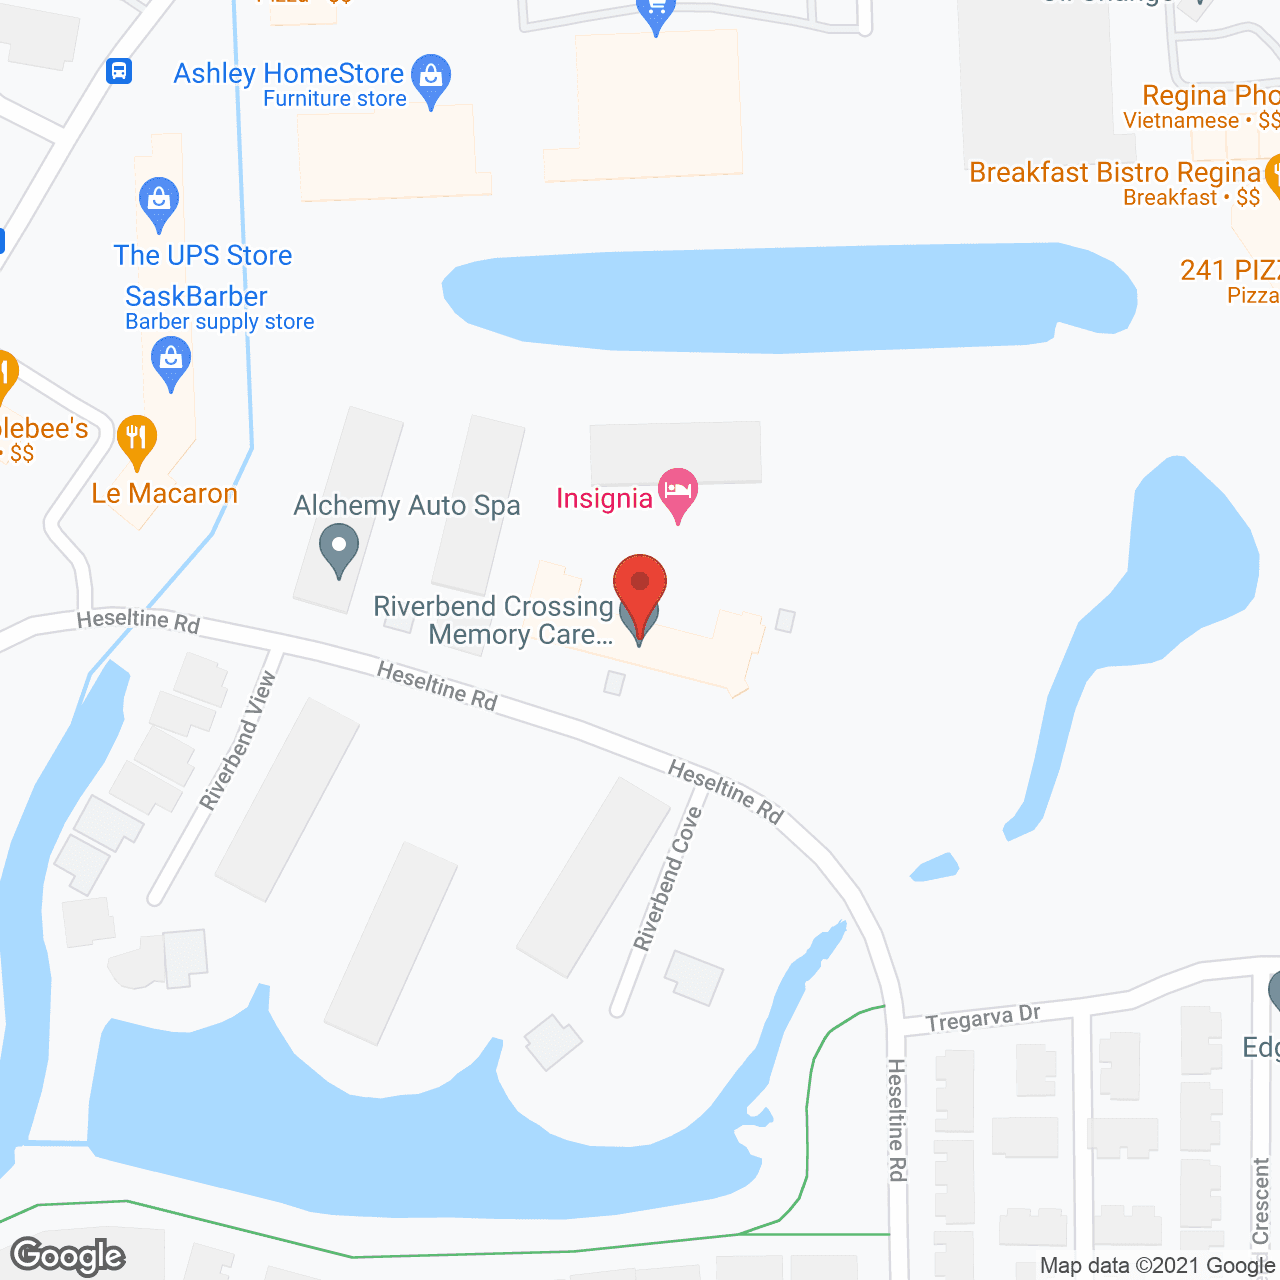 Riverbend Crossing in google map